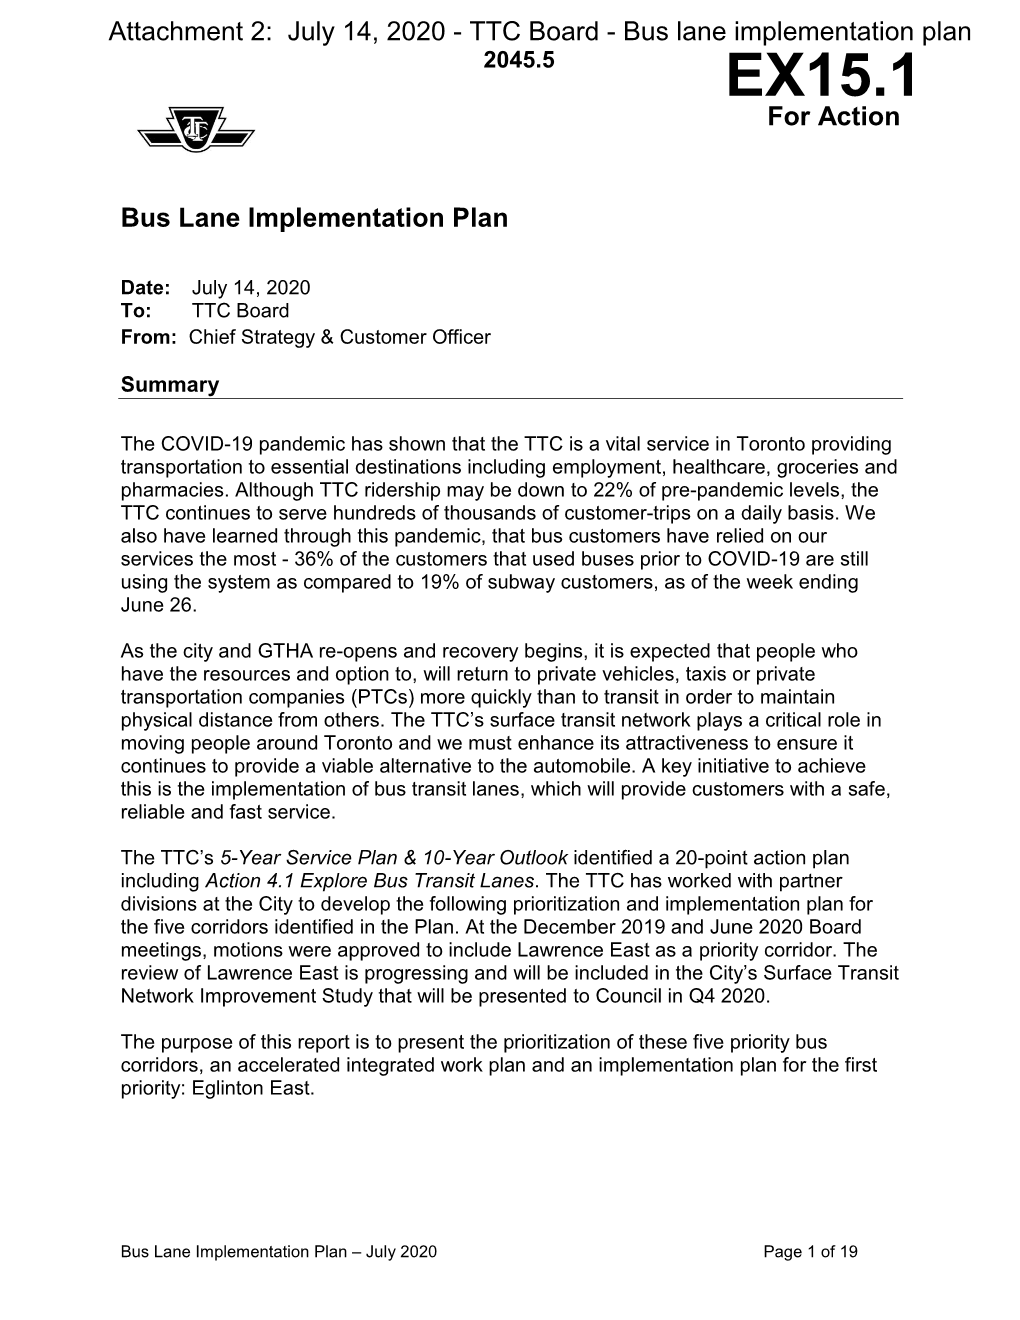 July 14, 2020 - TTC Board - Bus Lane Implementation Plan 2045.5 EX15.1 for Action